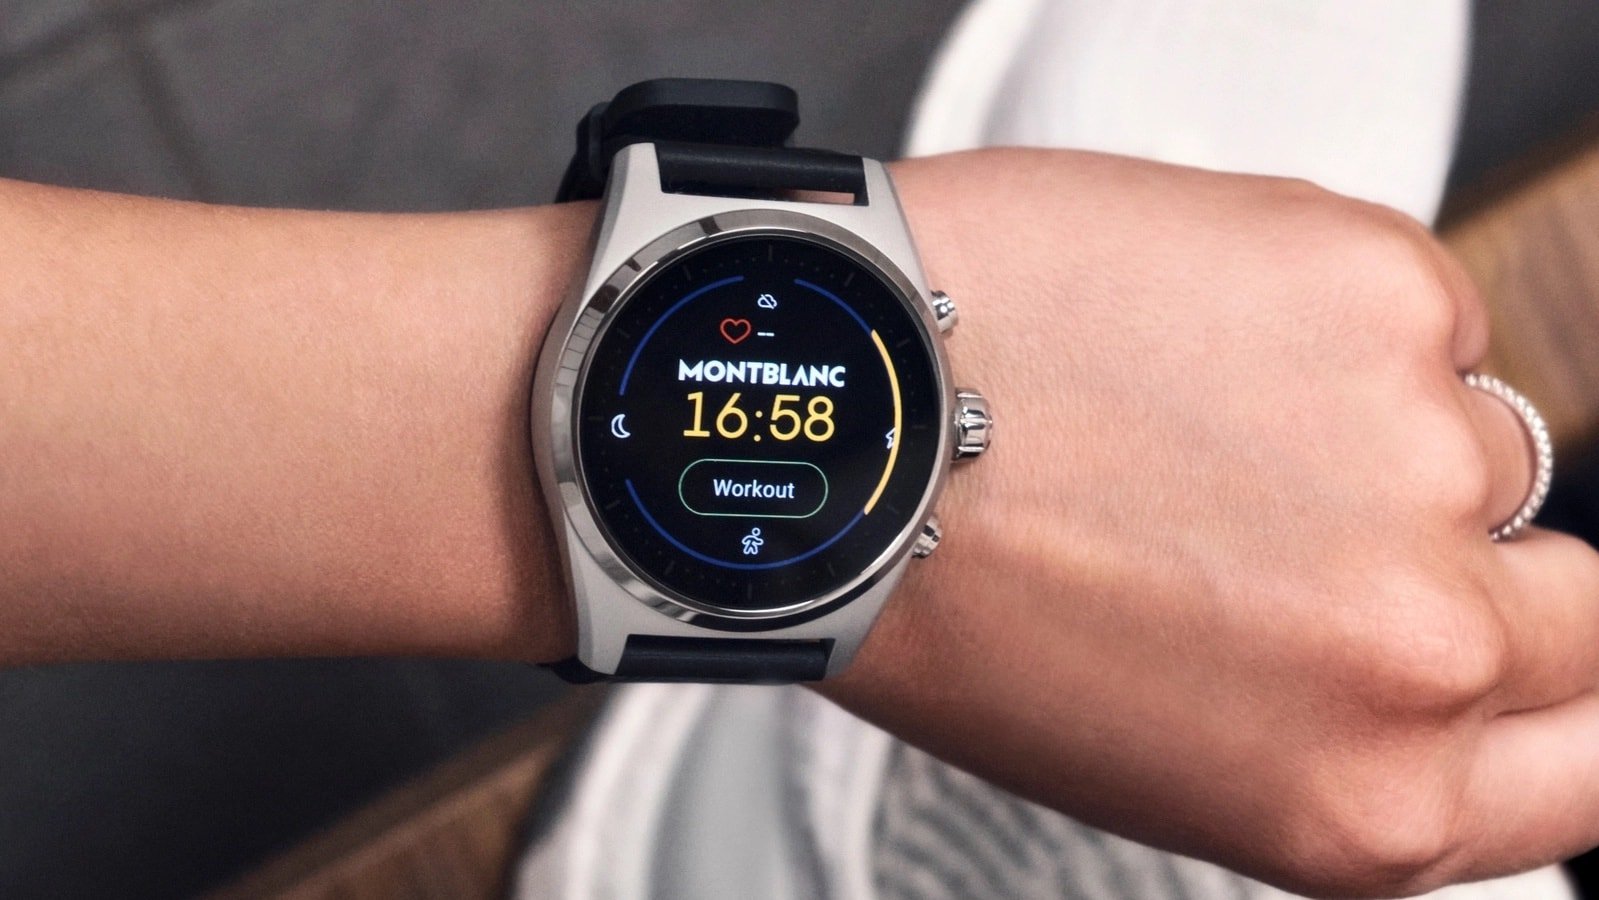 Montblanc Summit Lite smartwatch has a timeless, luxurious design